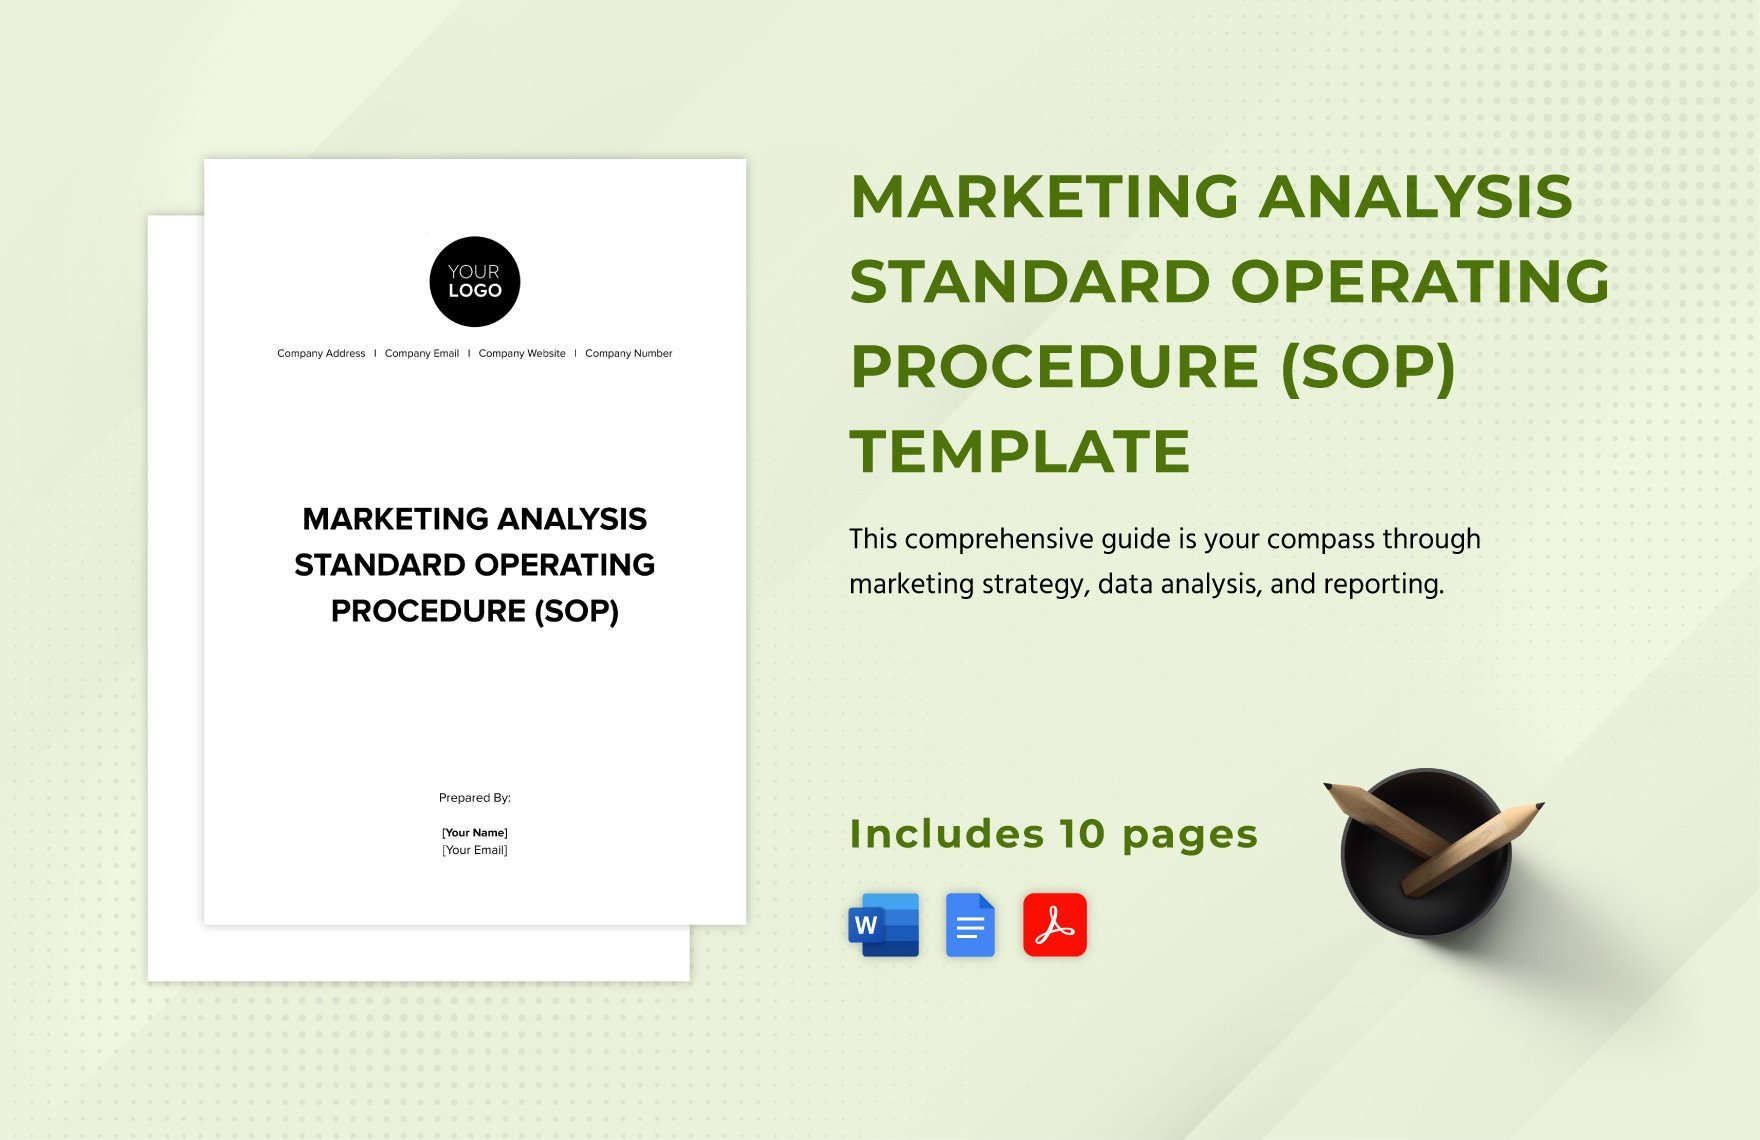 Marketing Analysis Standard Operating Procedure (SOP) Template